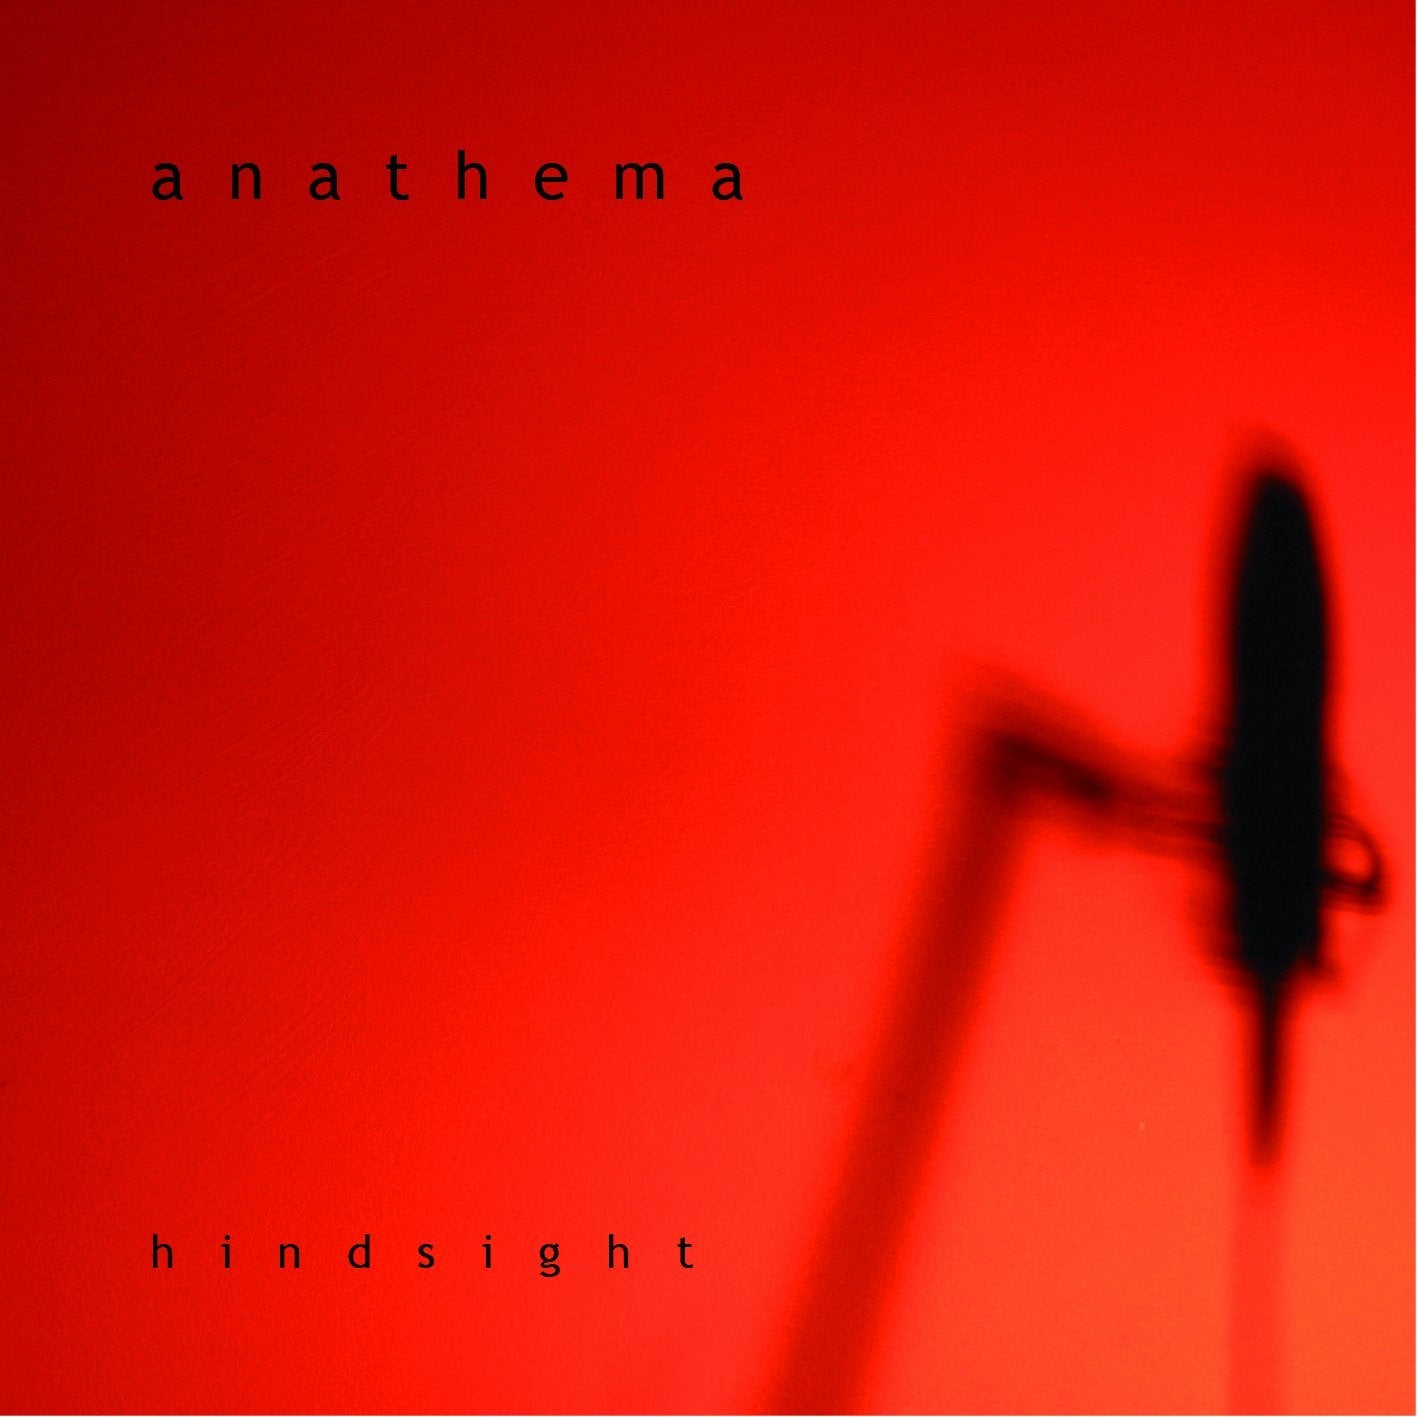 Anathema "Hindsight" Vinyl